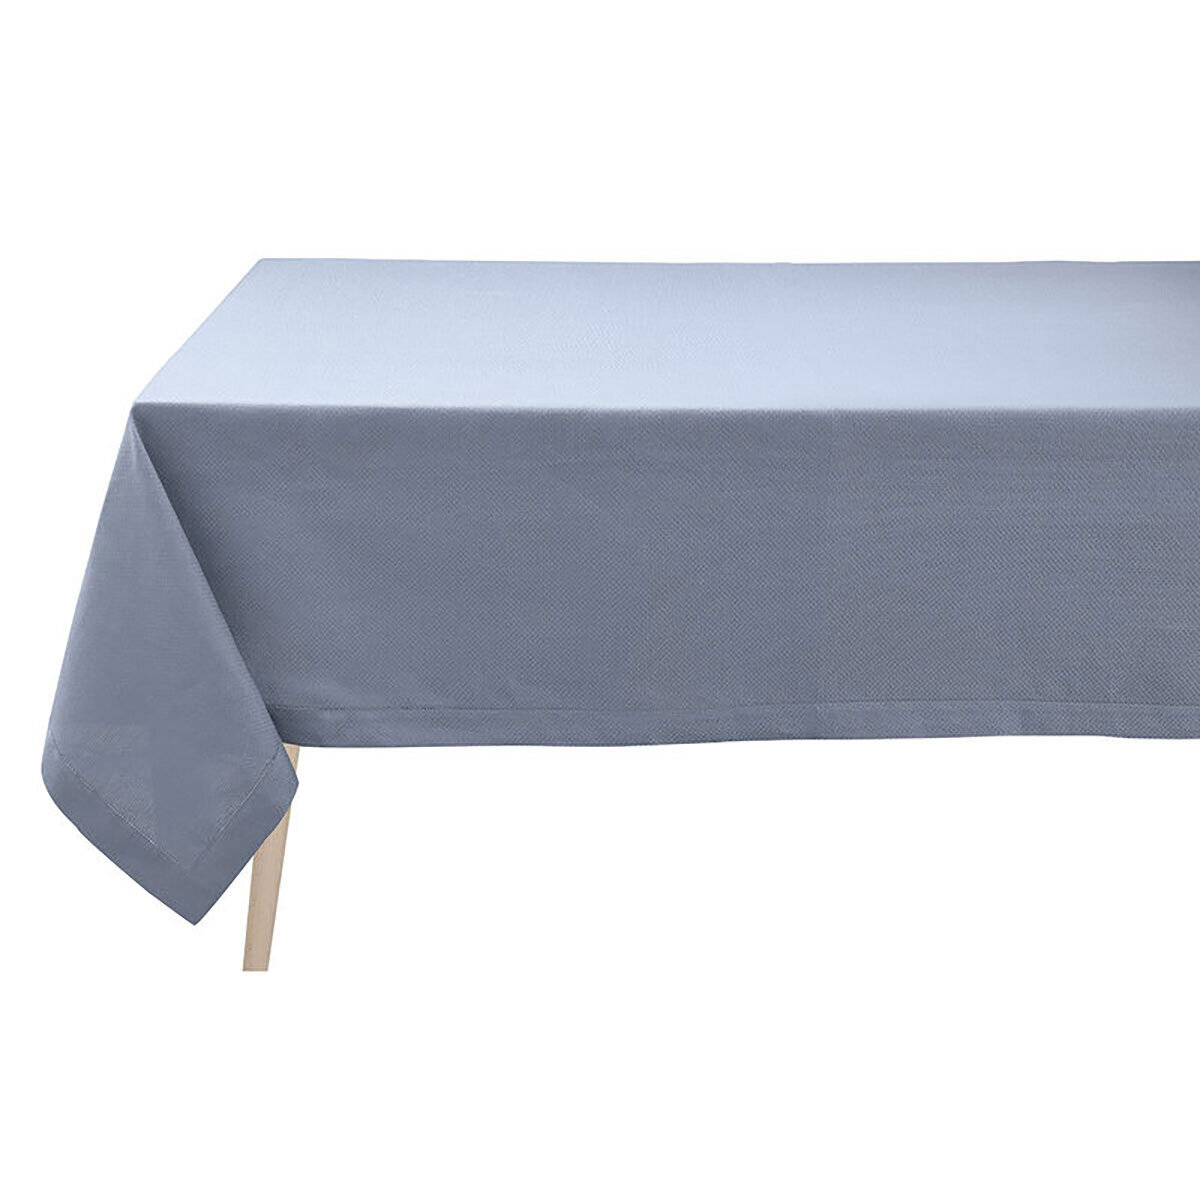 Le Jacquard Francais Portofino Blue Tablecloth 69 x 69 Inch 27347